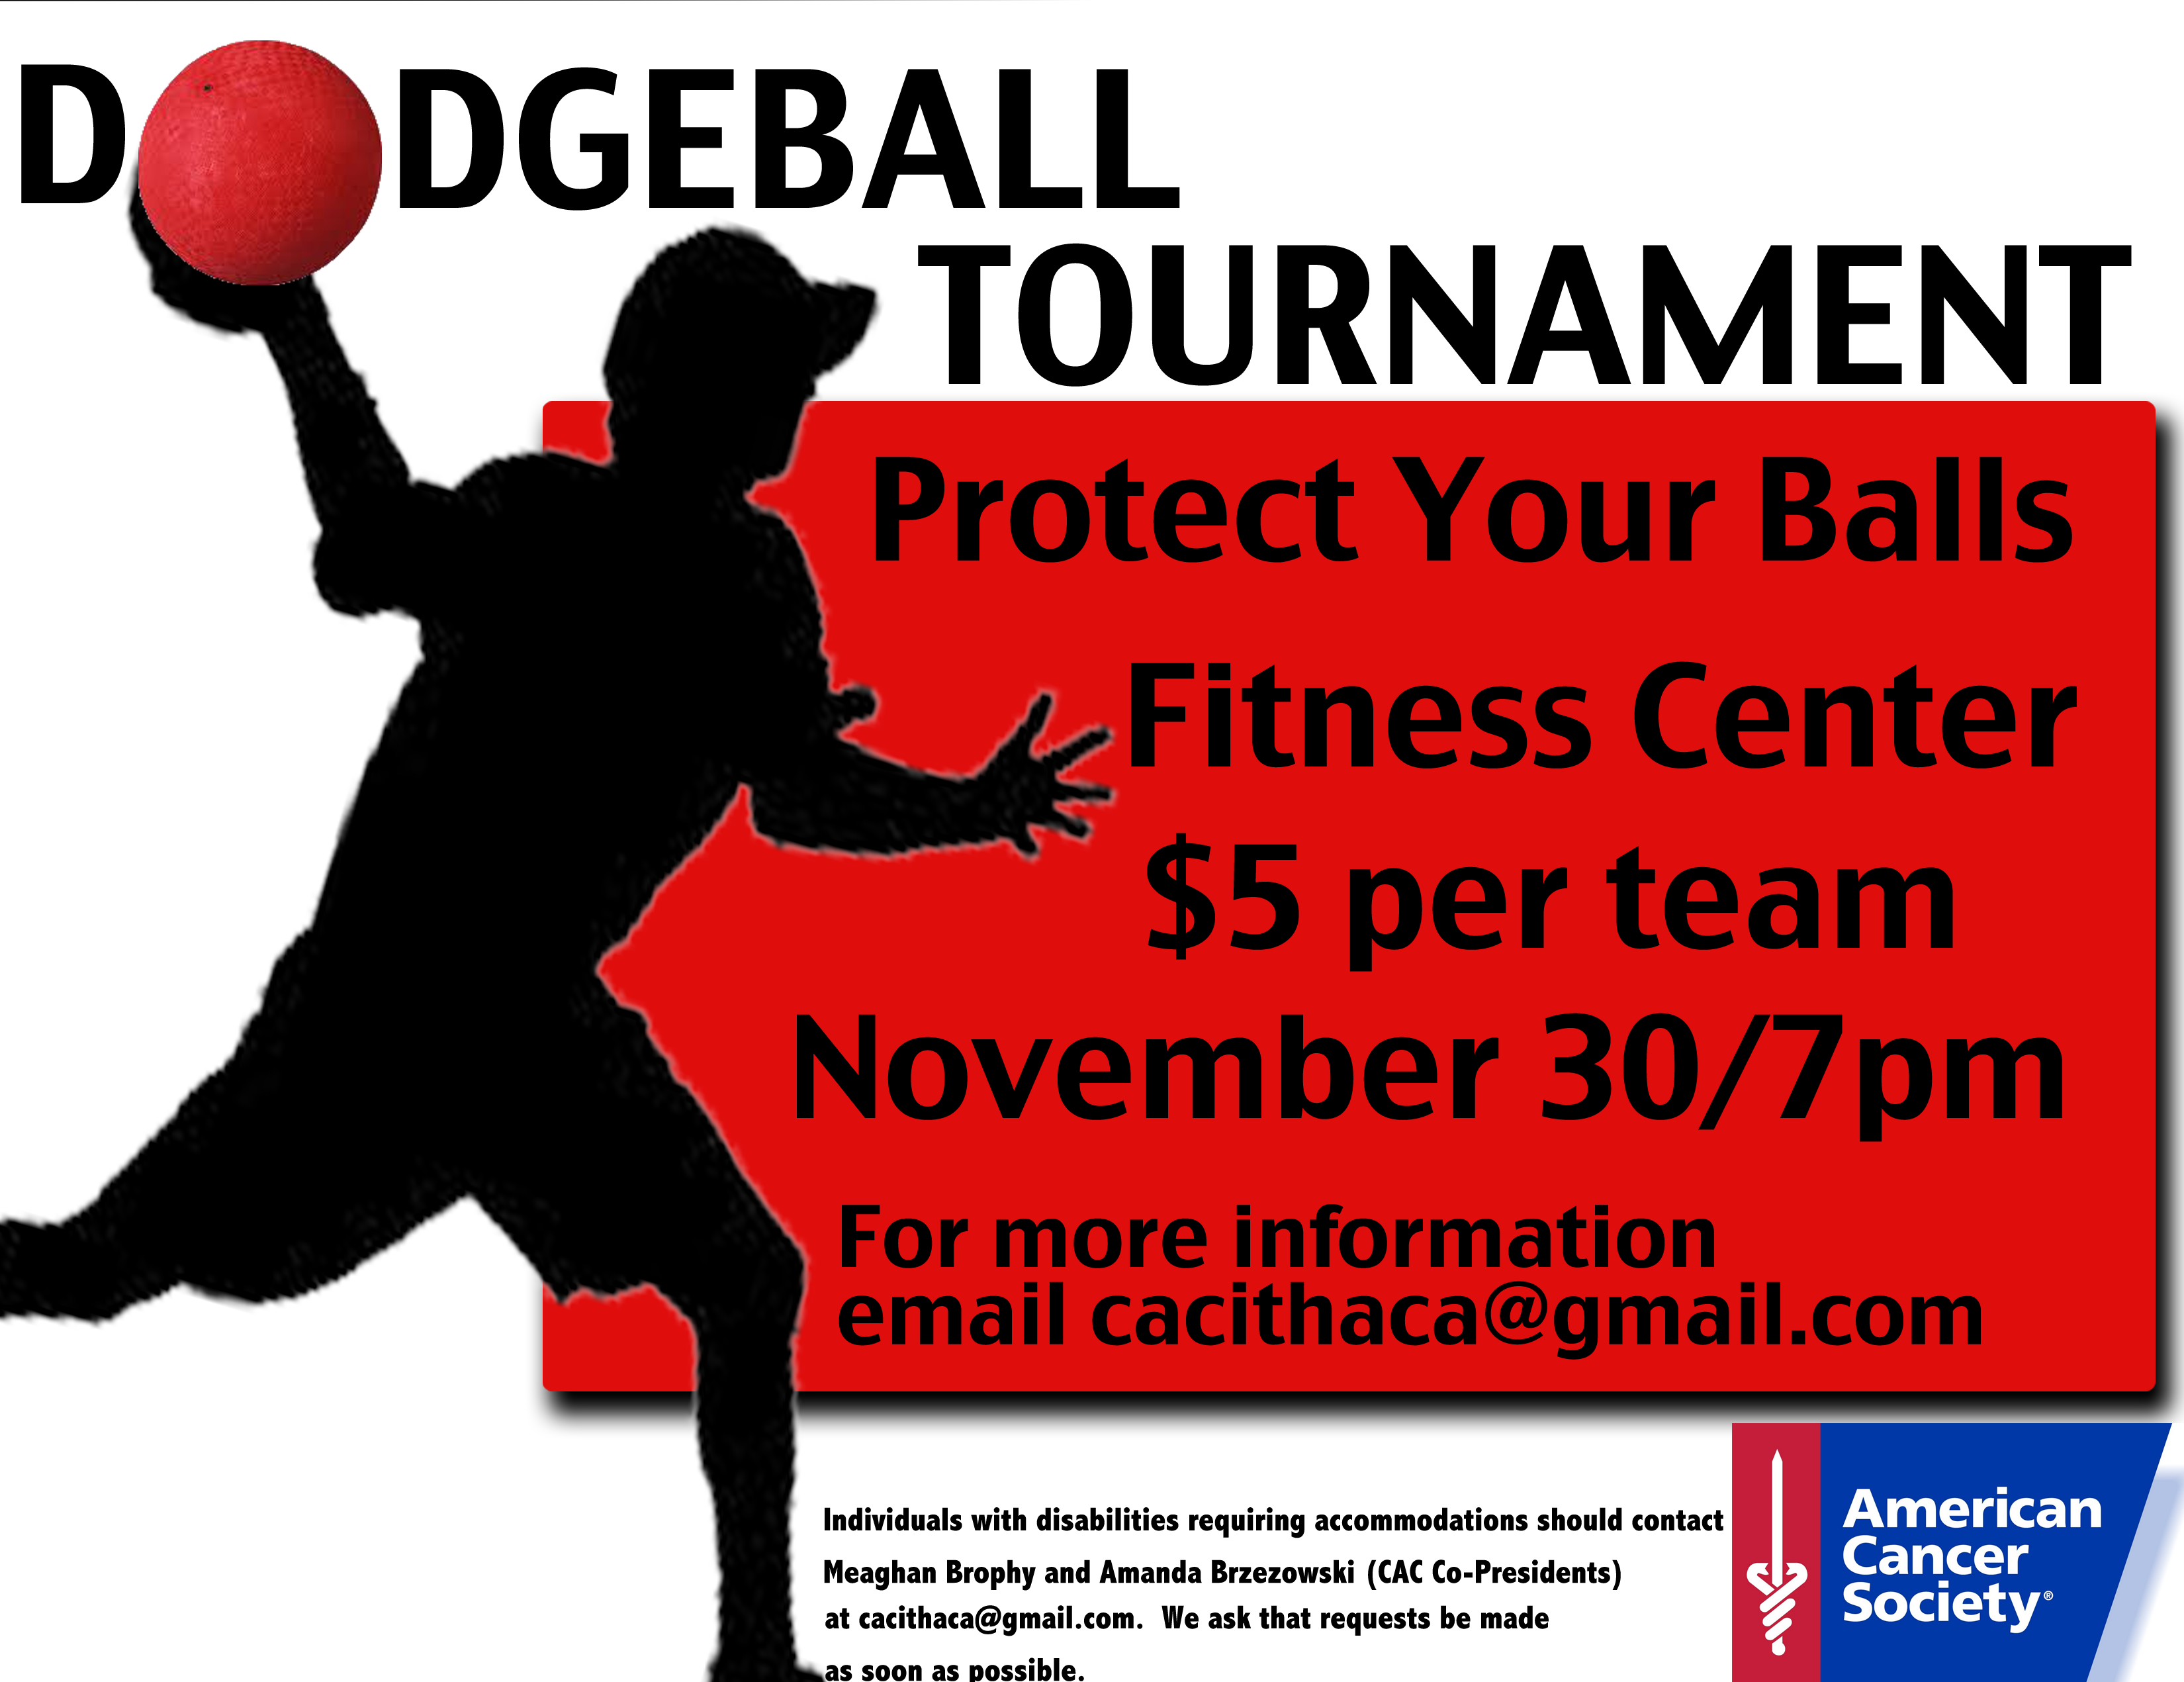 Dodgeball Tournament Poster